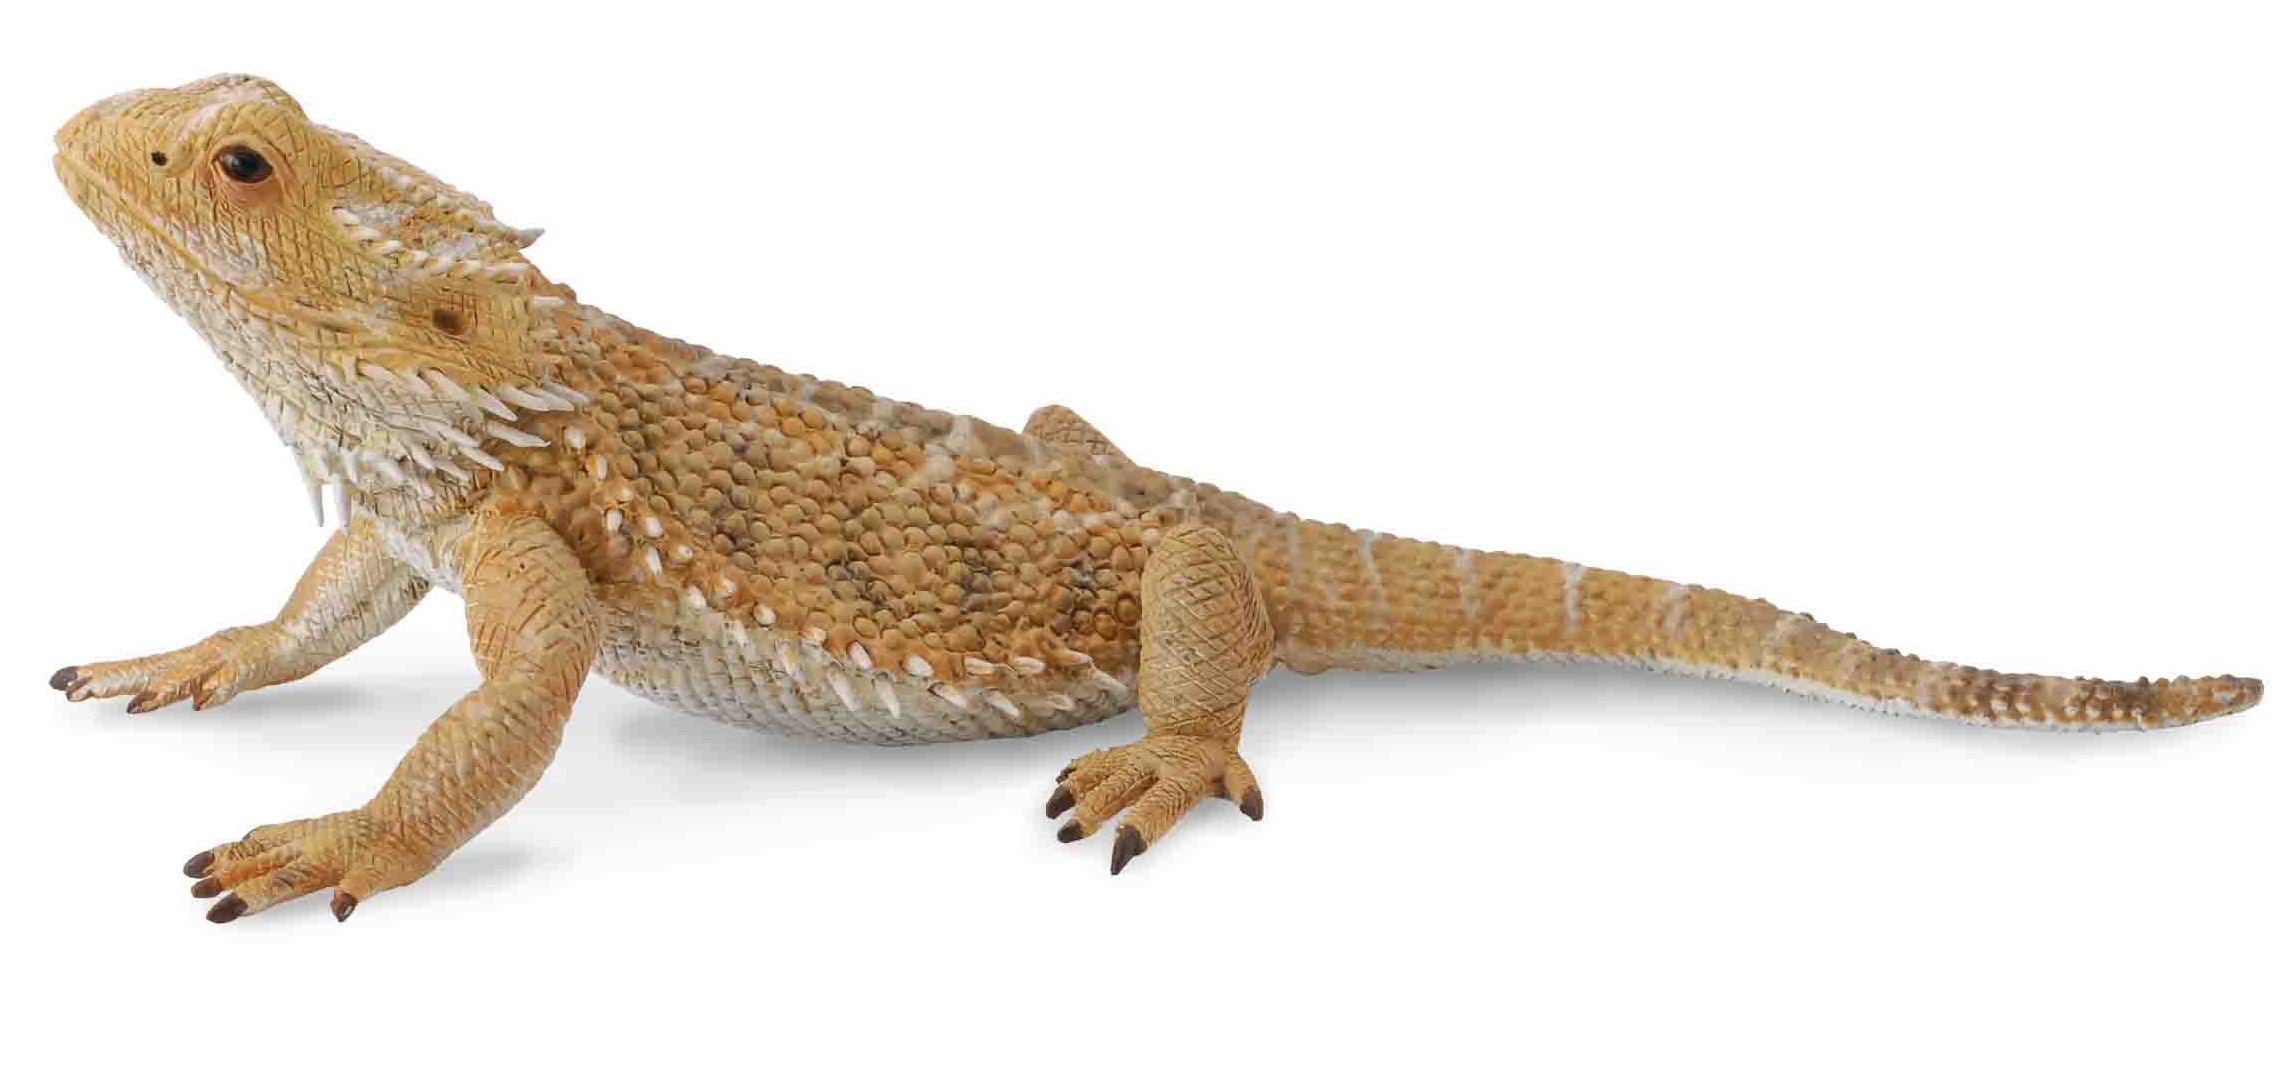 Beardead Dragon Lizard 88567b - Елабуга 